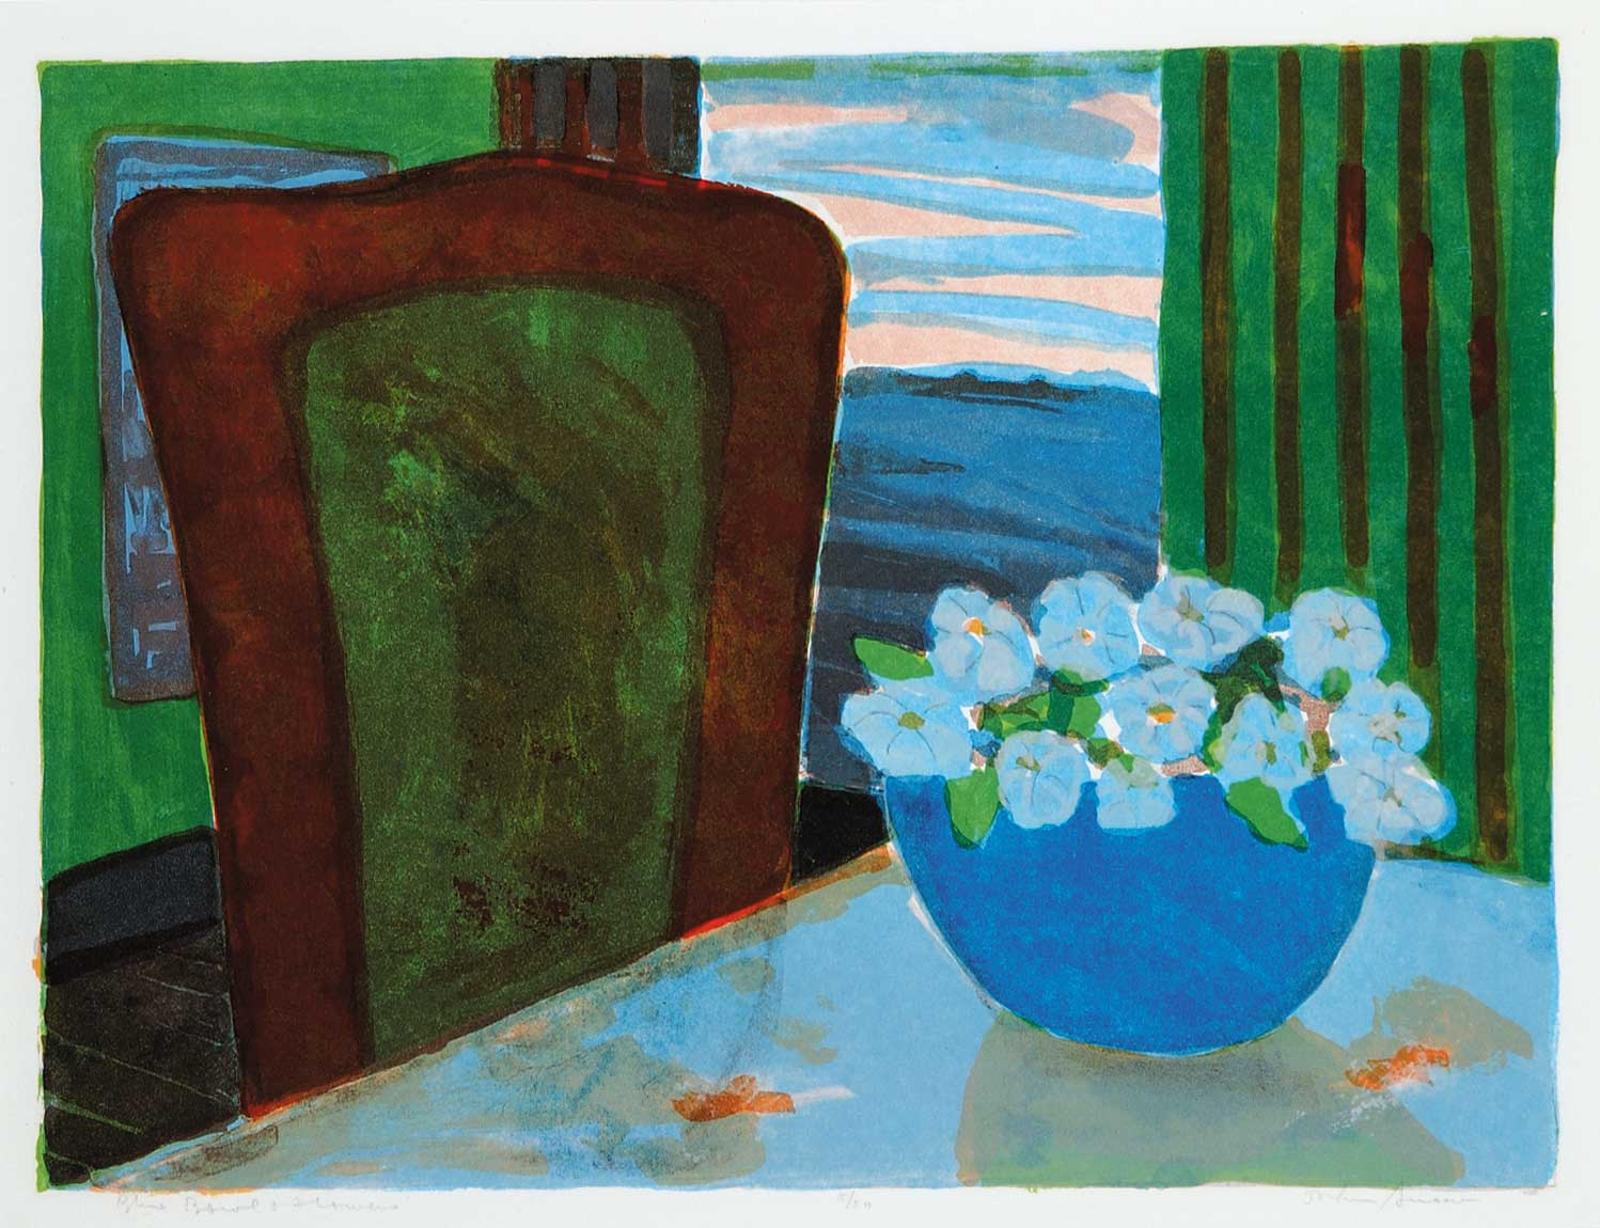 John Harold Thomas Snow (1911-2004) - Blue Bowl and Flowers